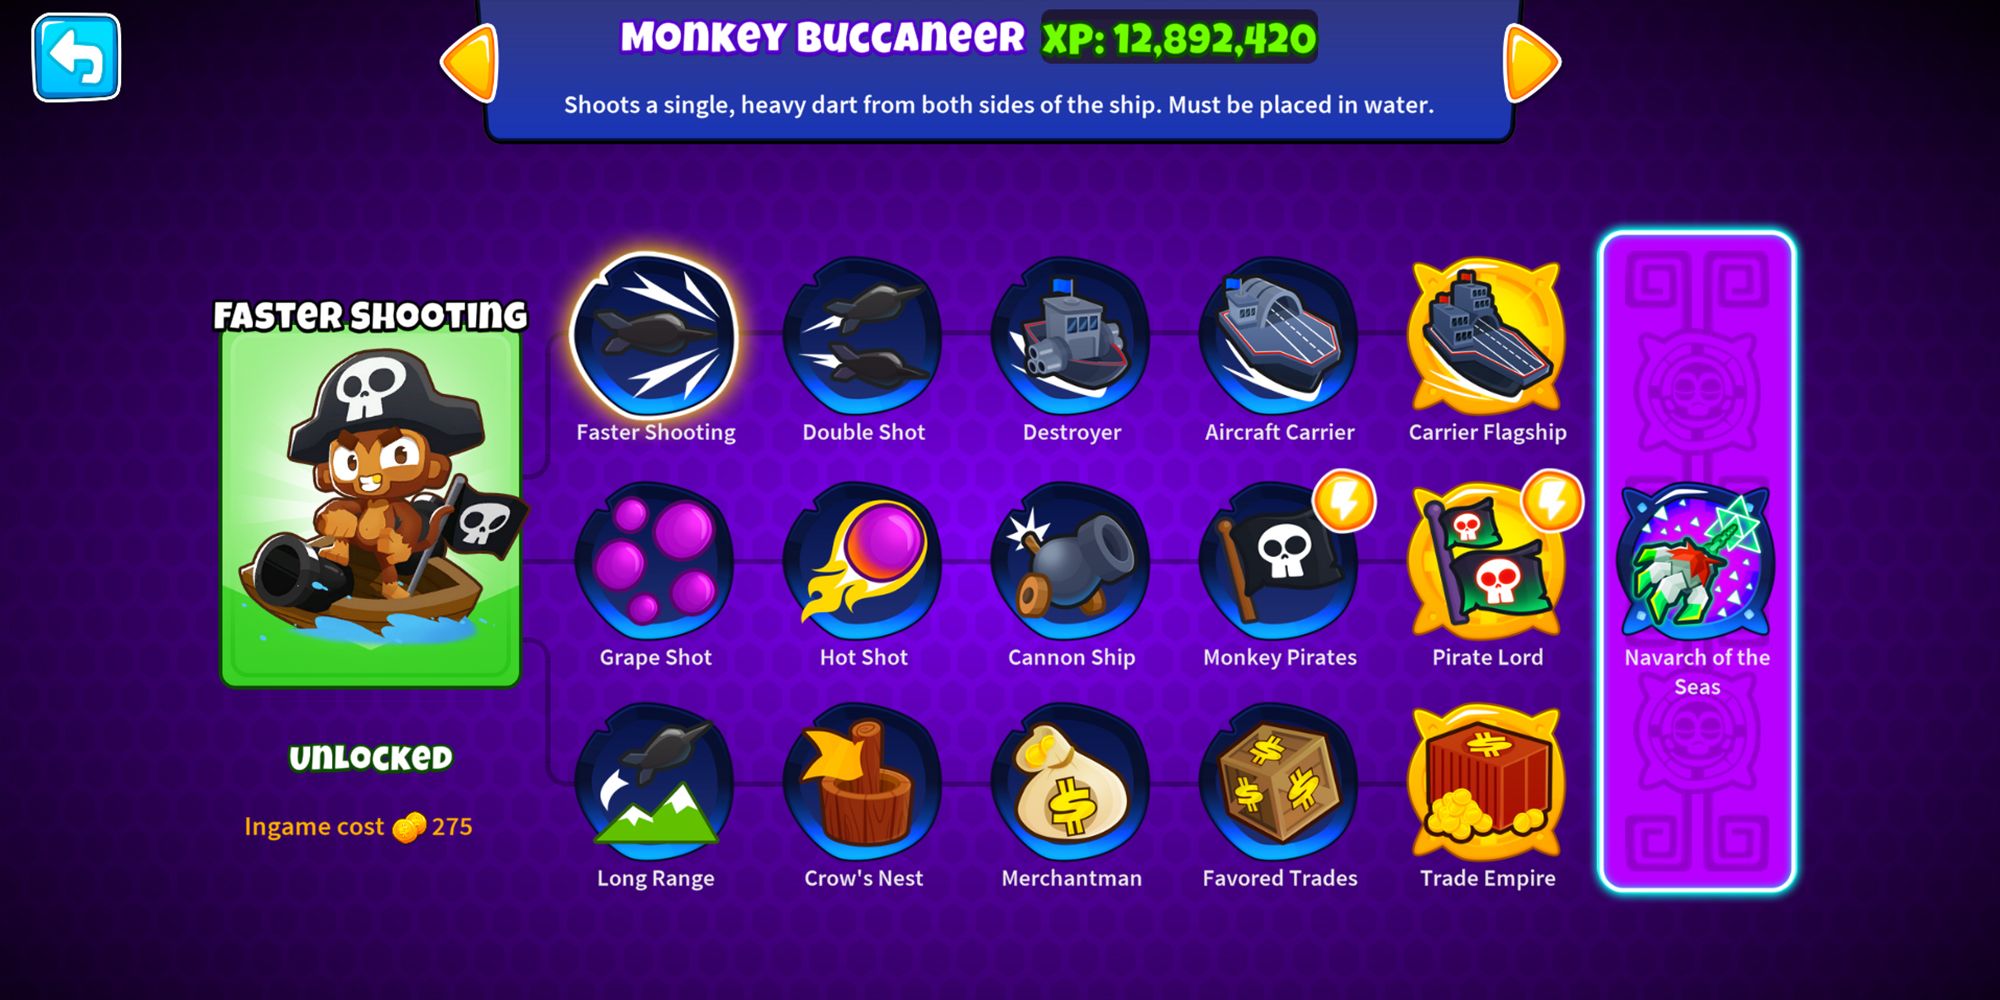 Monkey Buccaneer Bloons TD 6